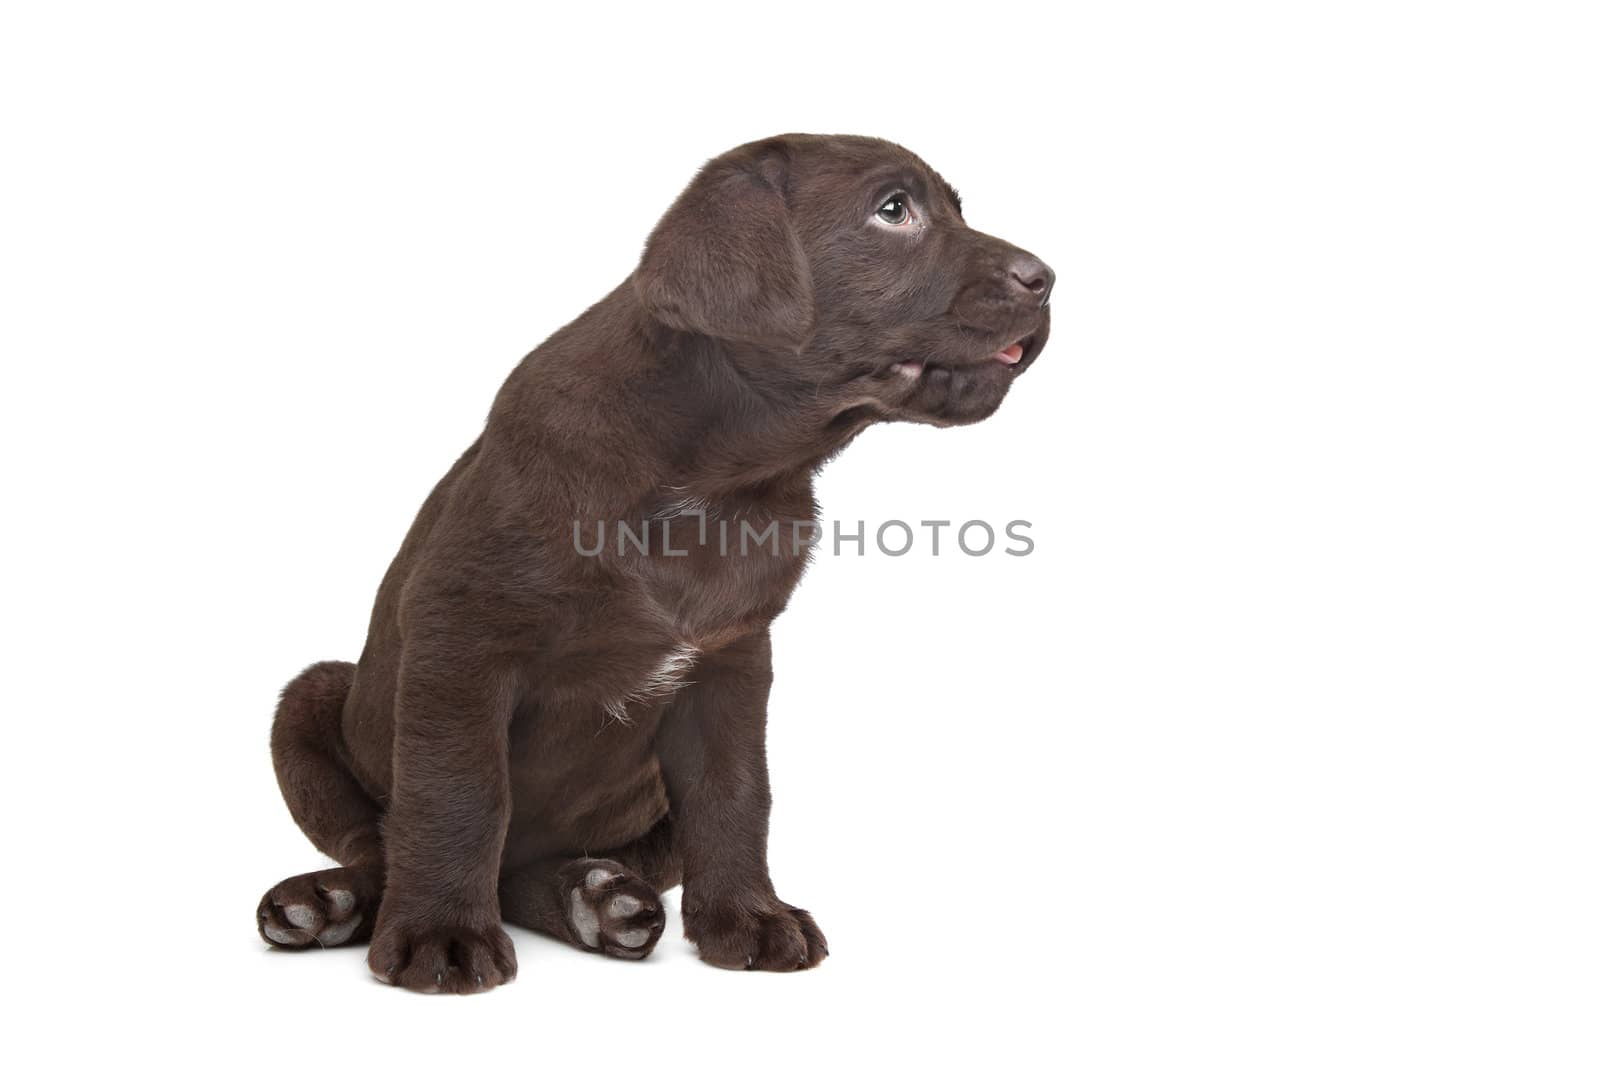 Chocolate Labrador puppy by eriklam